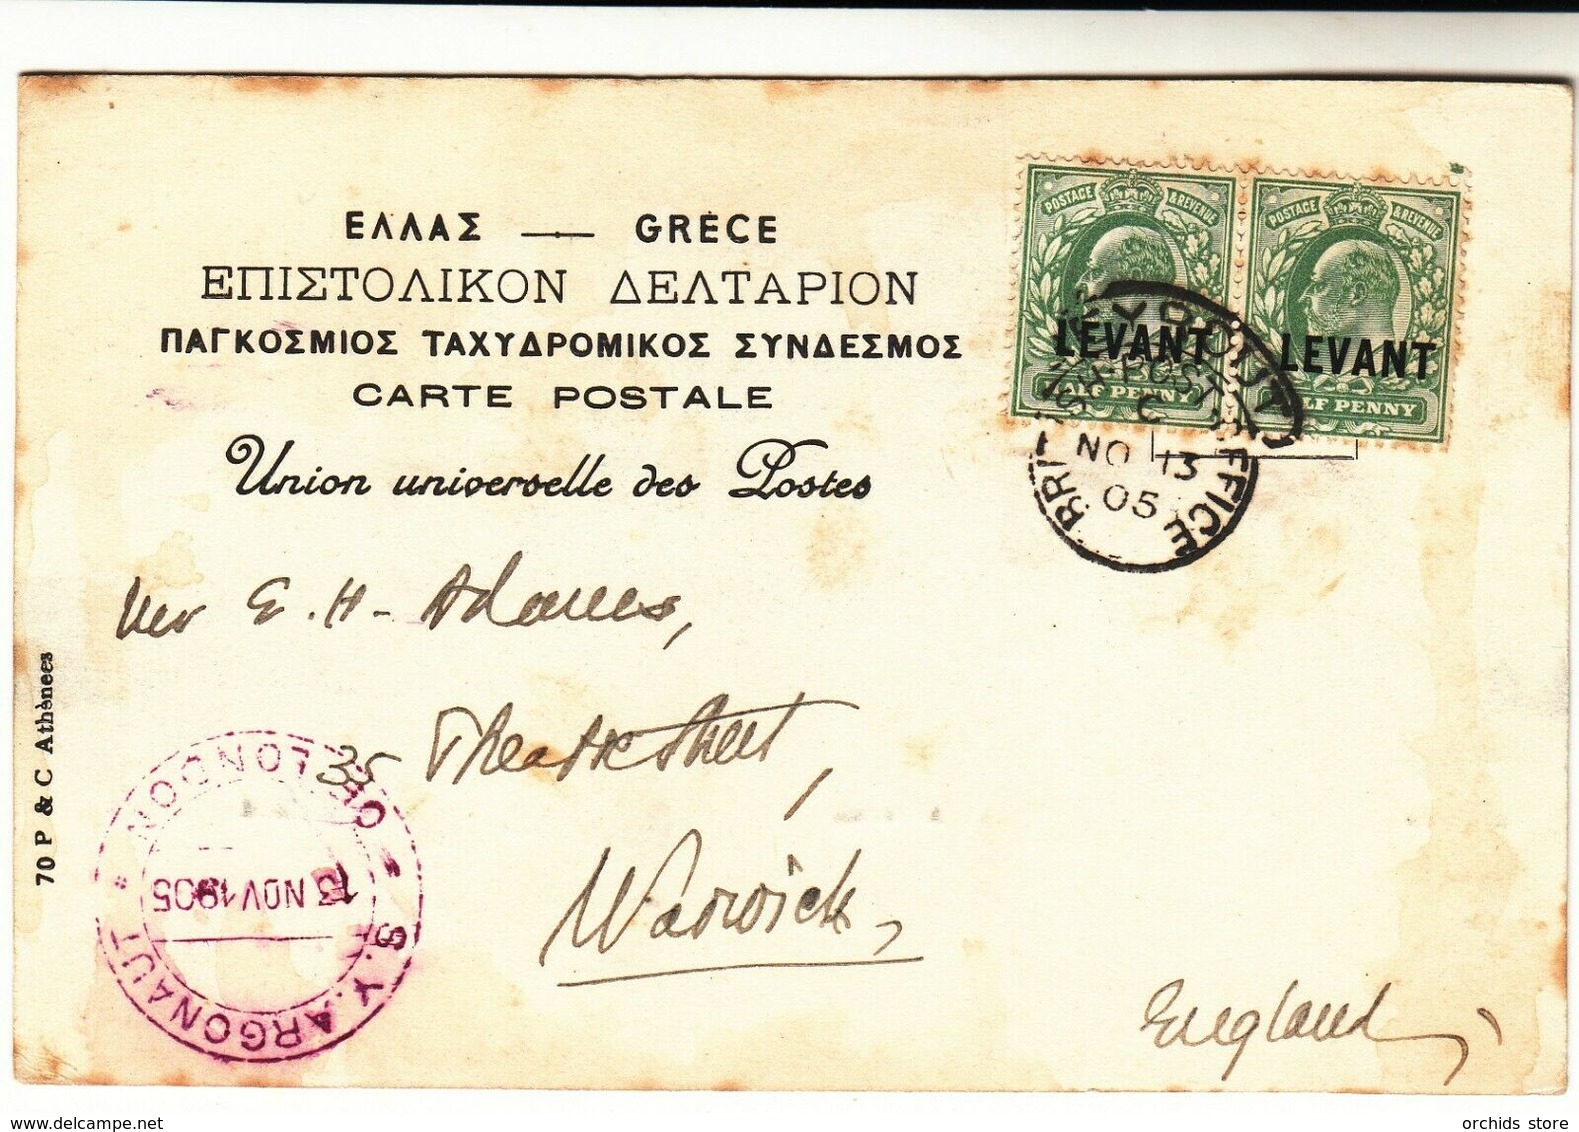 E11 Levant British Office In BEYROUT Lebanon 1905 Greece Postcard Sent To England Via Steam Yacht Argonaut (rare Cancel) - Lebanon